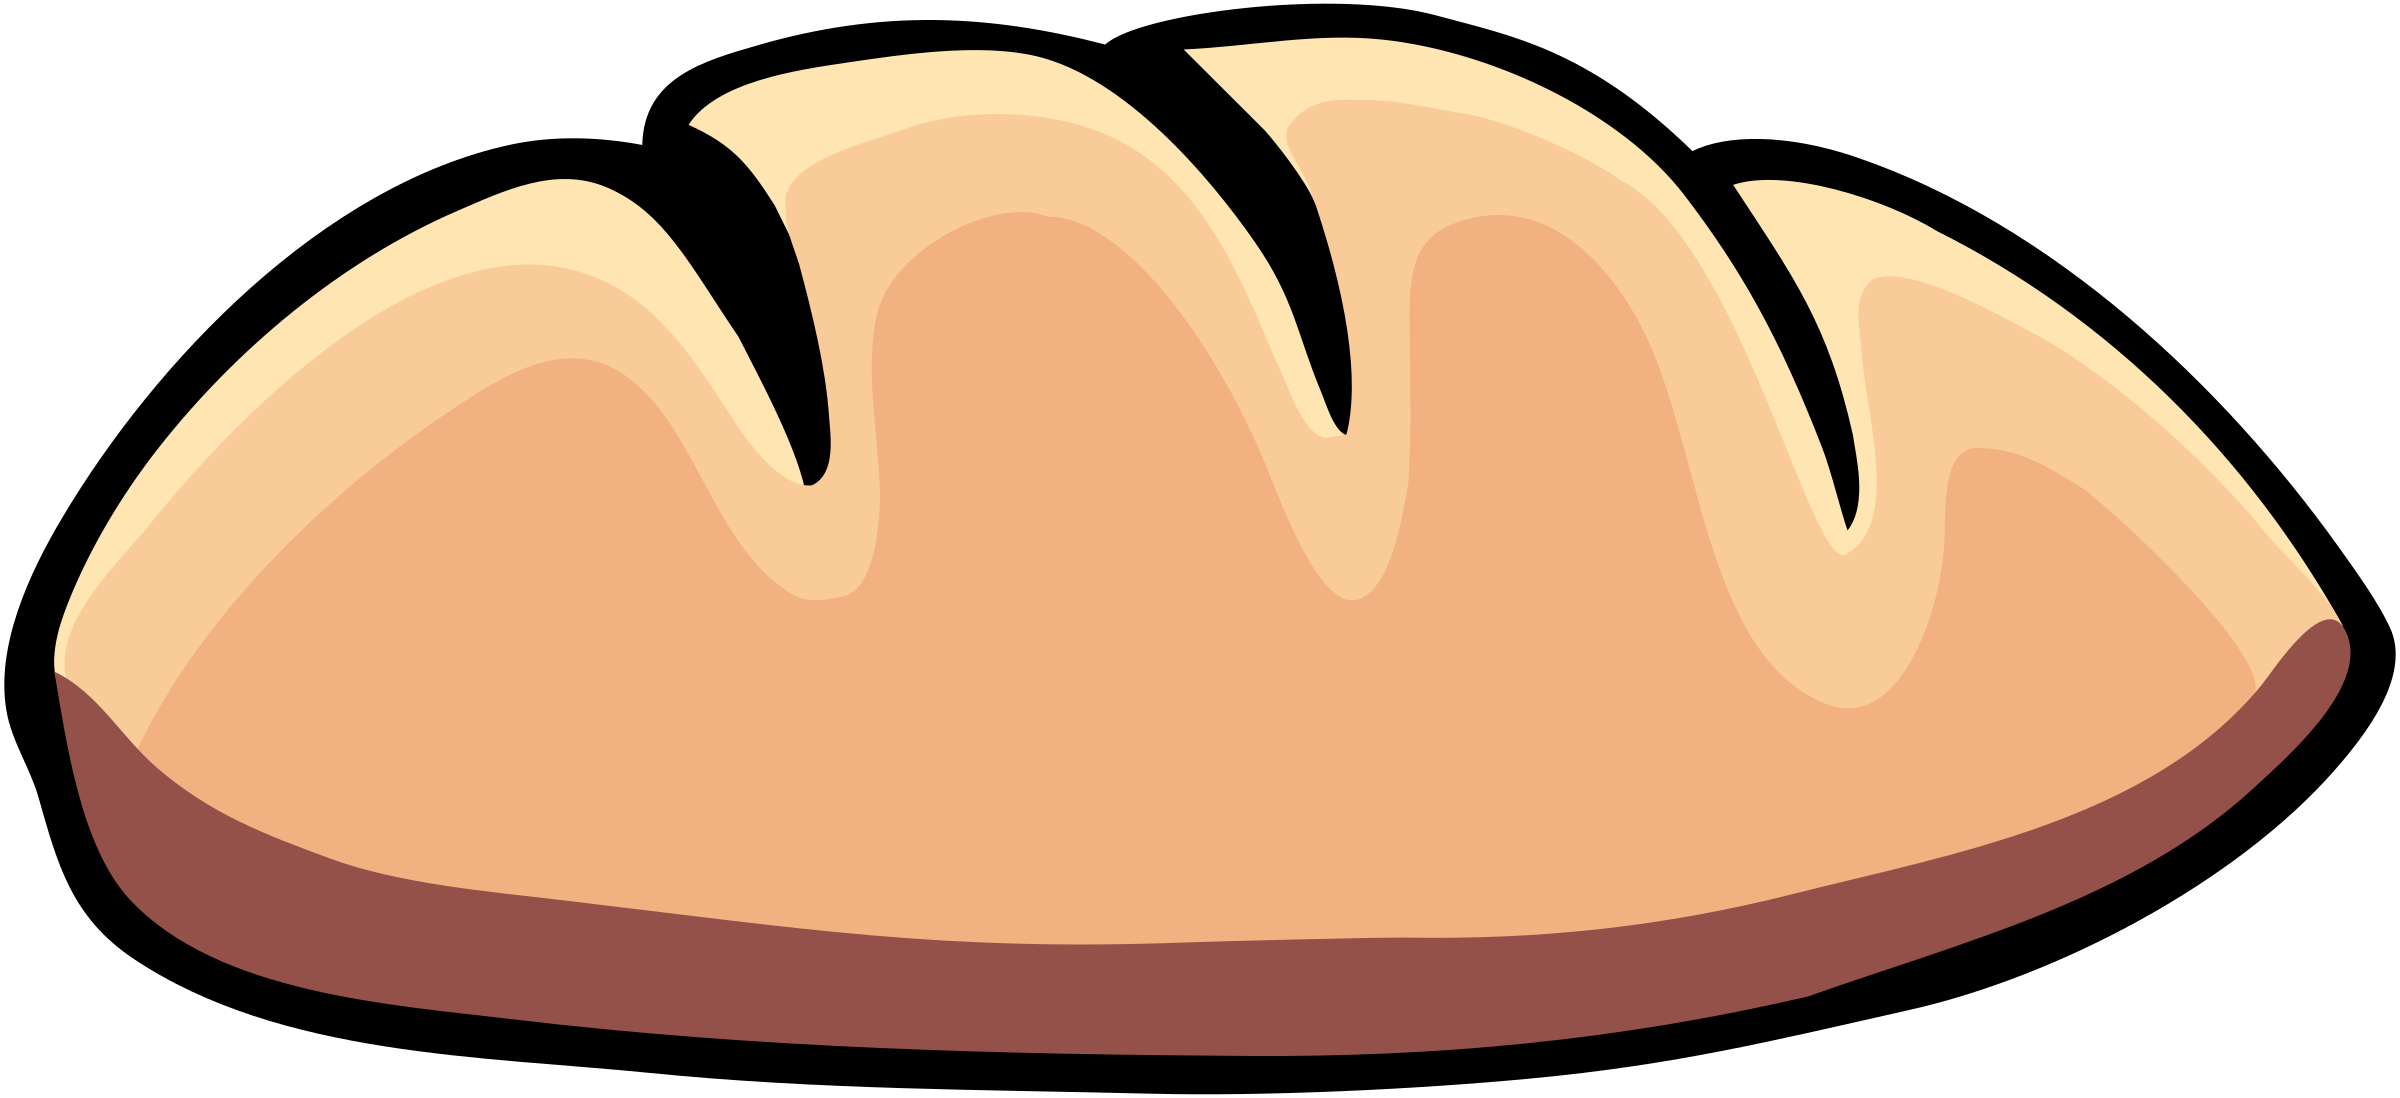 Garlic bread White bread Hamburger Toast Clip art